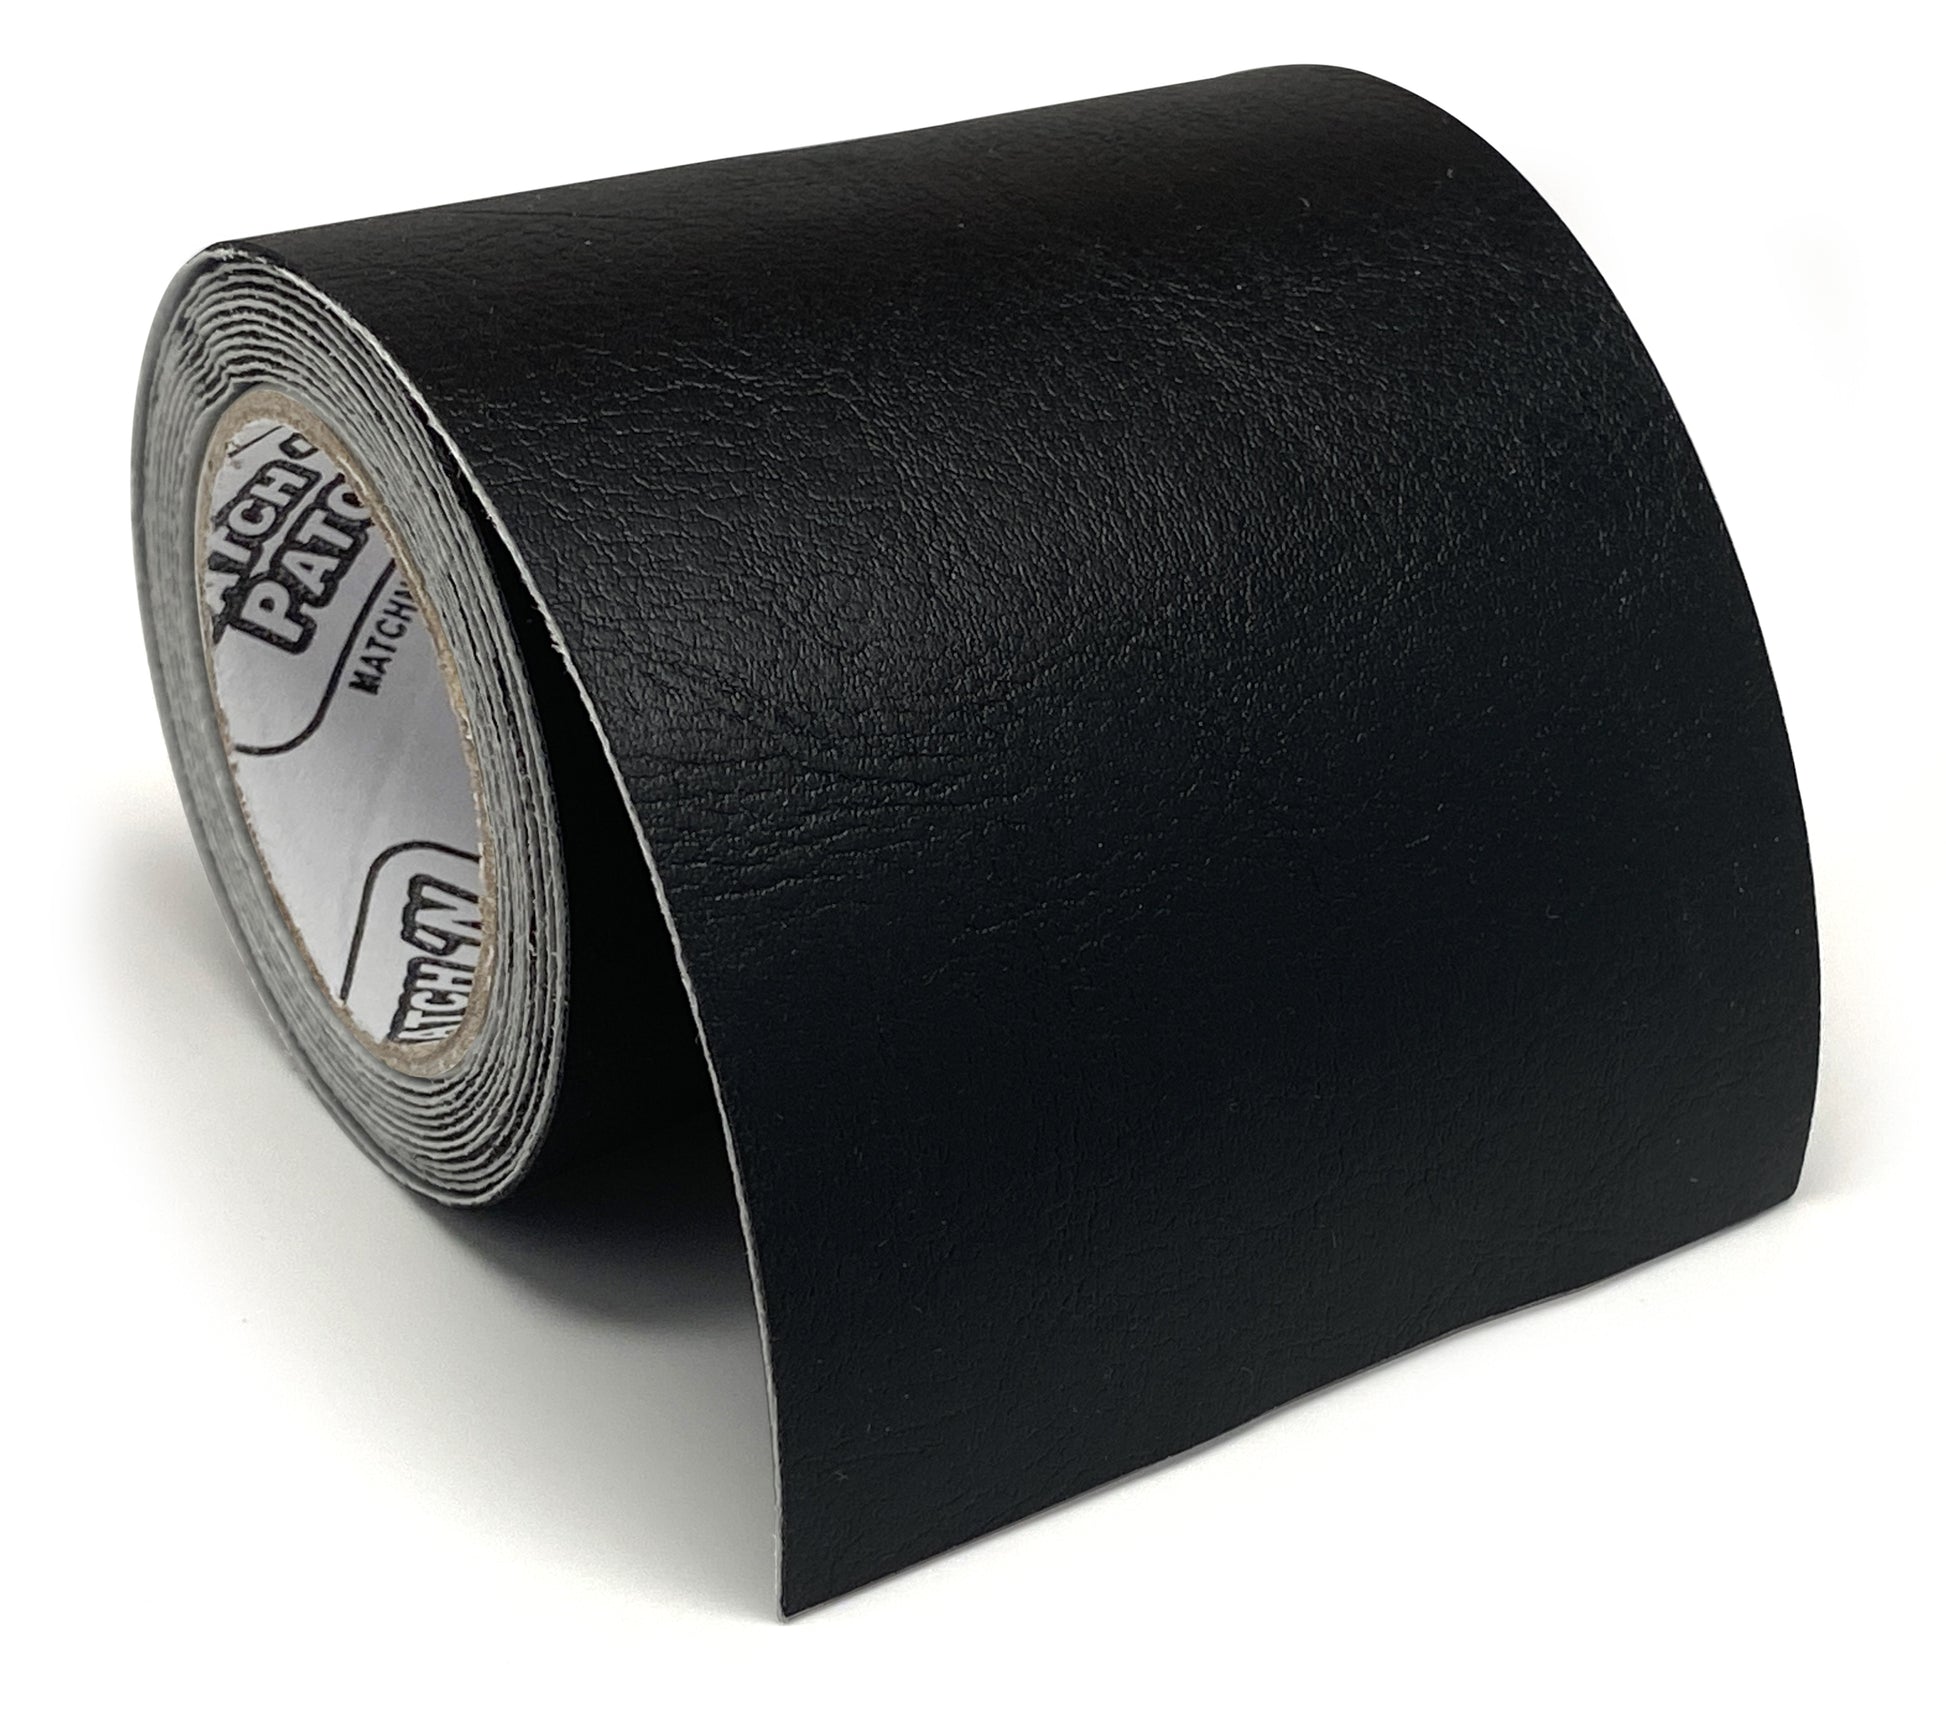 jesilo Black Lather - Stratize Adhesive Leather Repair Patch at Rs 549.00, चमड़े का पैच, लेदर पैचेज, चमड़े के पैचेज - Sunny Clothing, Guwahati